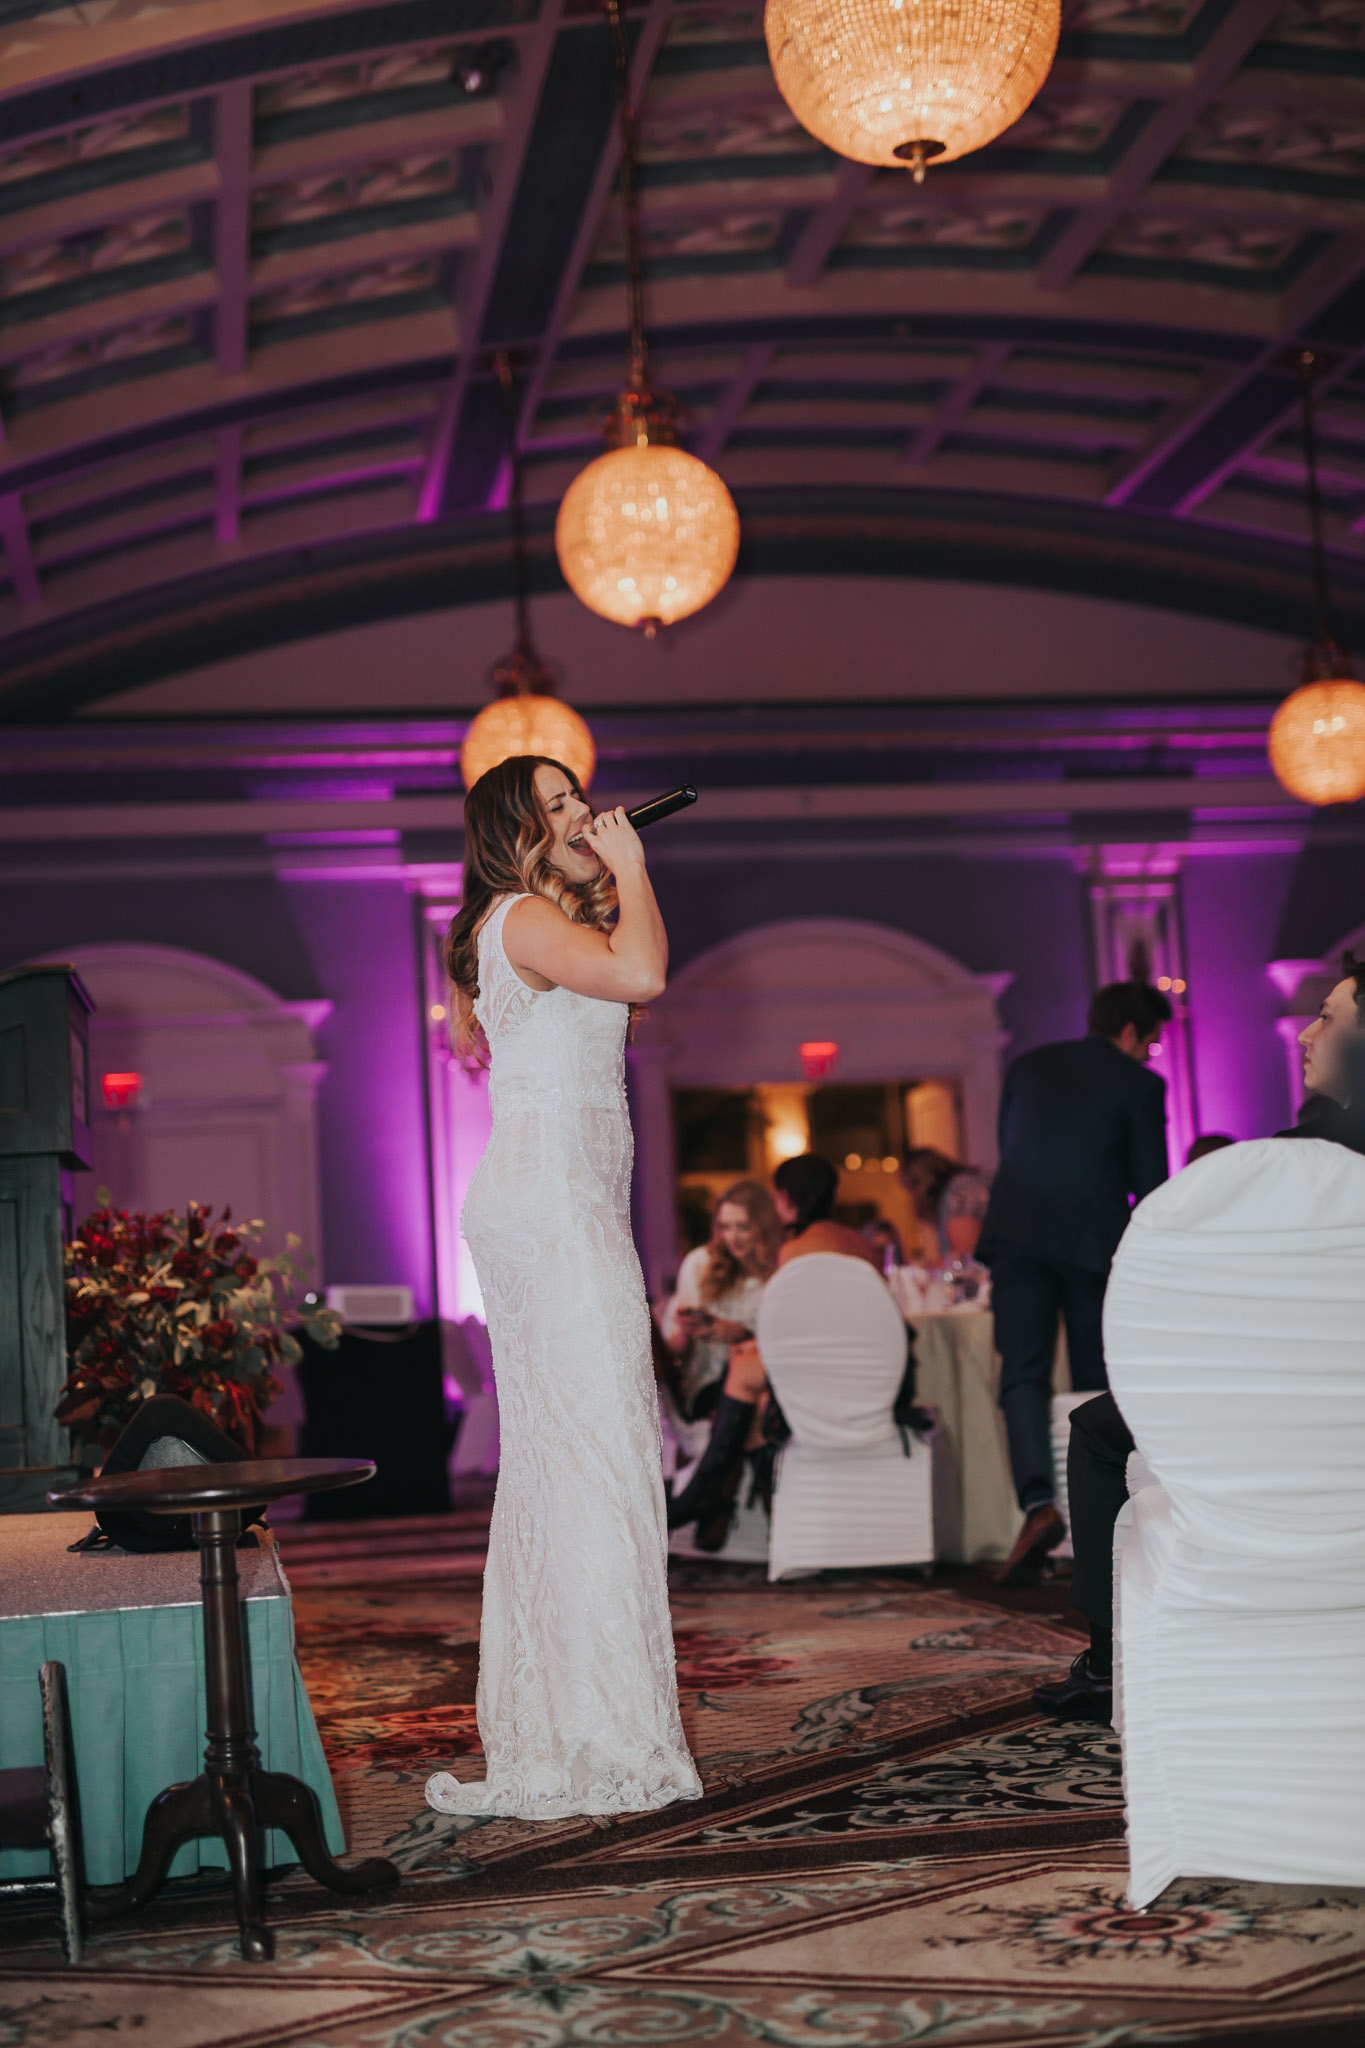 Eva of Beauty Bride serenades guests at the 2016 Vancouver Island Wedding Awards